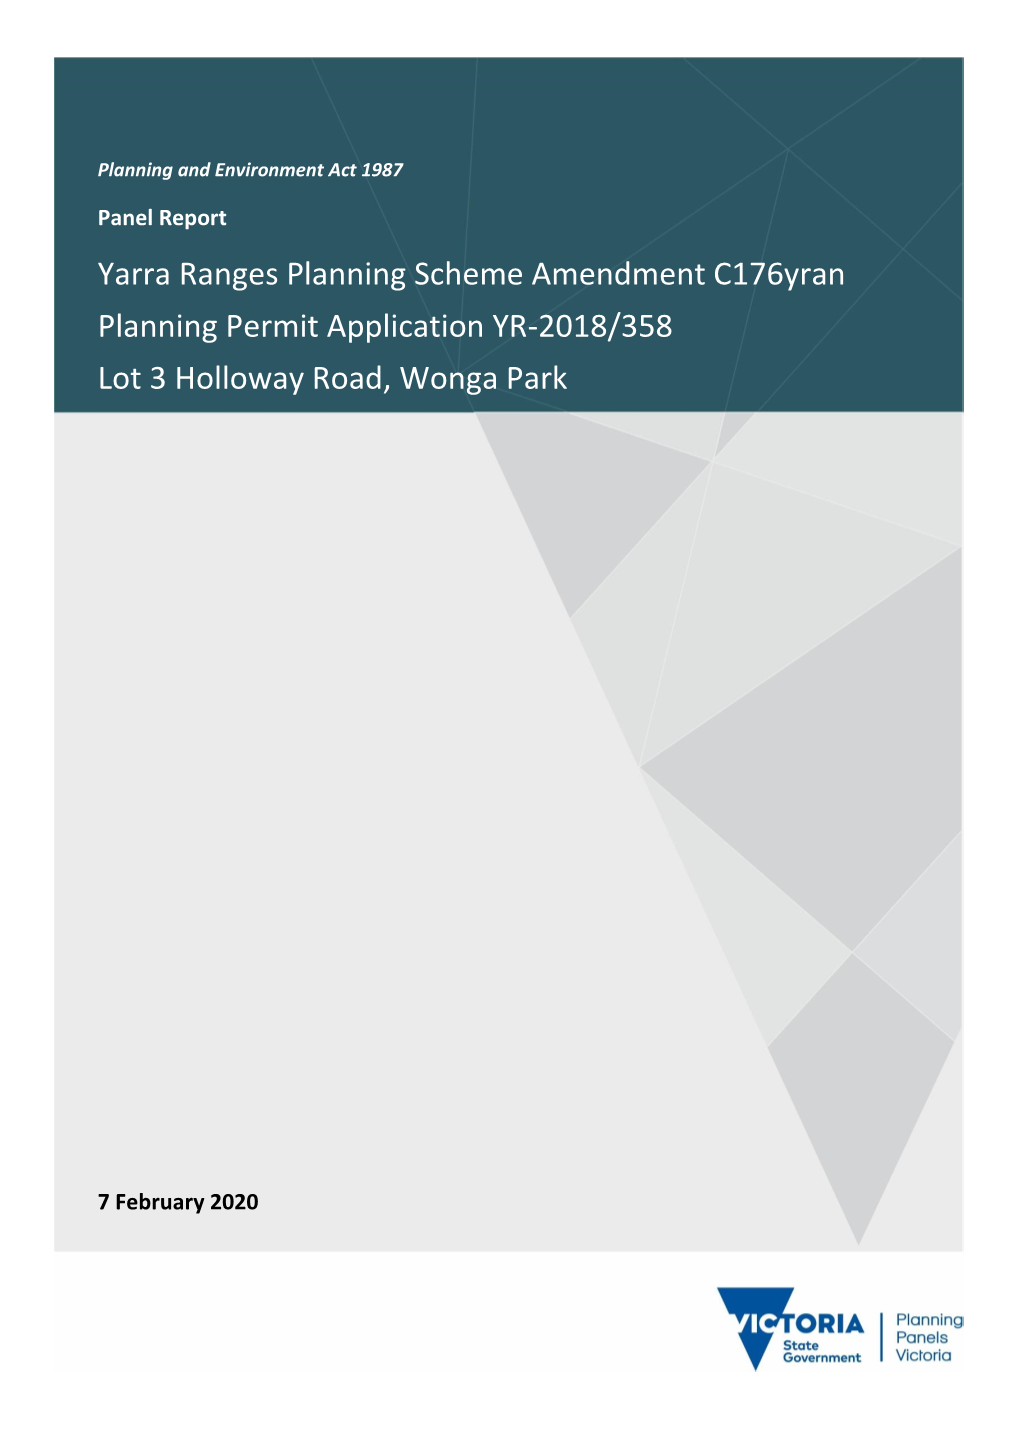 Yarra Ranges Planning Scheme Amendment C176yran Planning Permit Application YR-2018/358 Lot 3 Holloway Road, Wonga Park